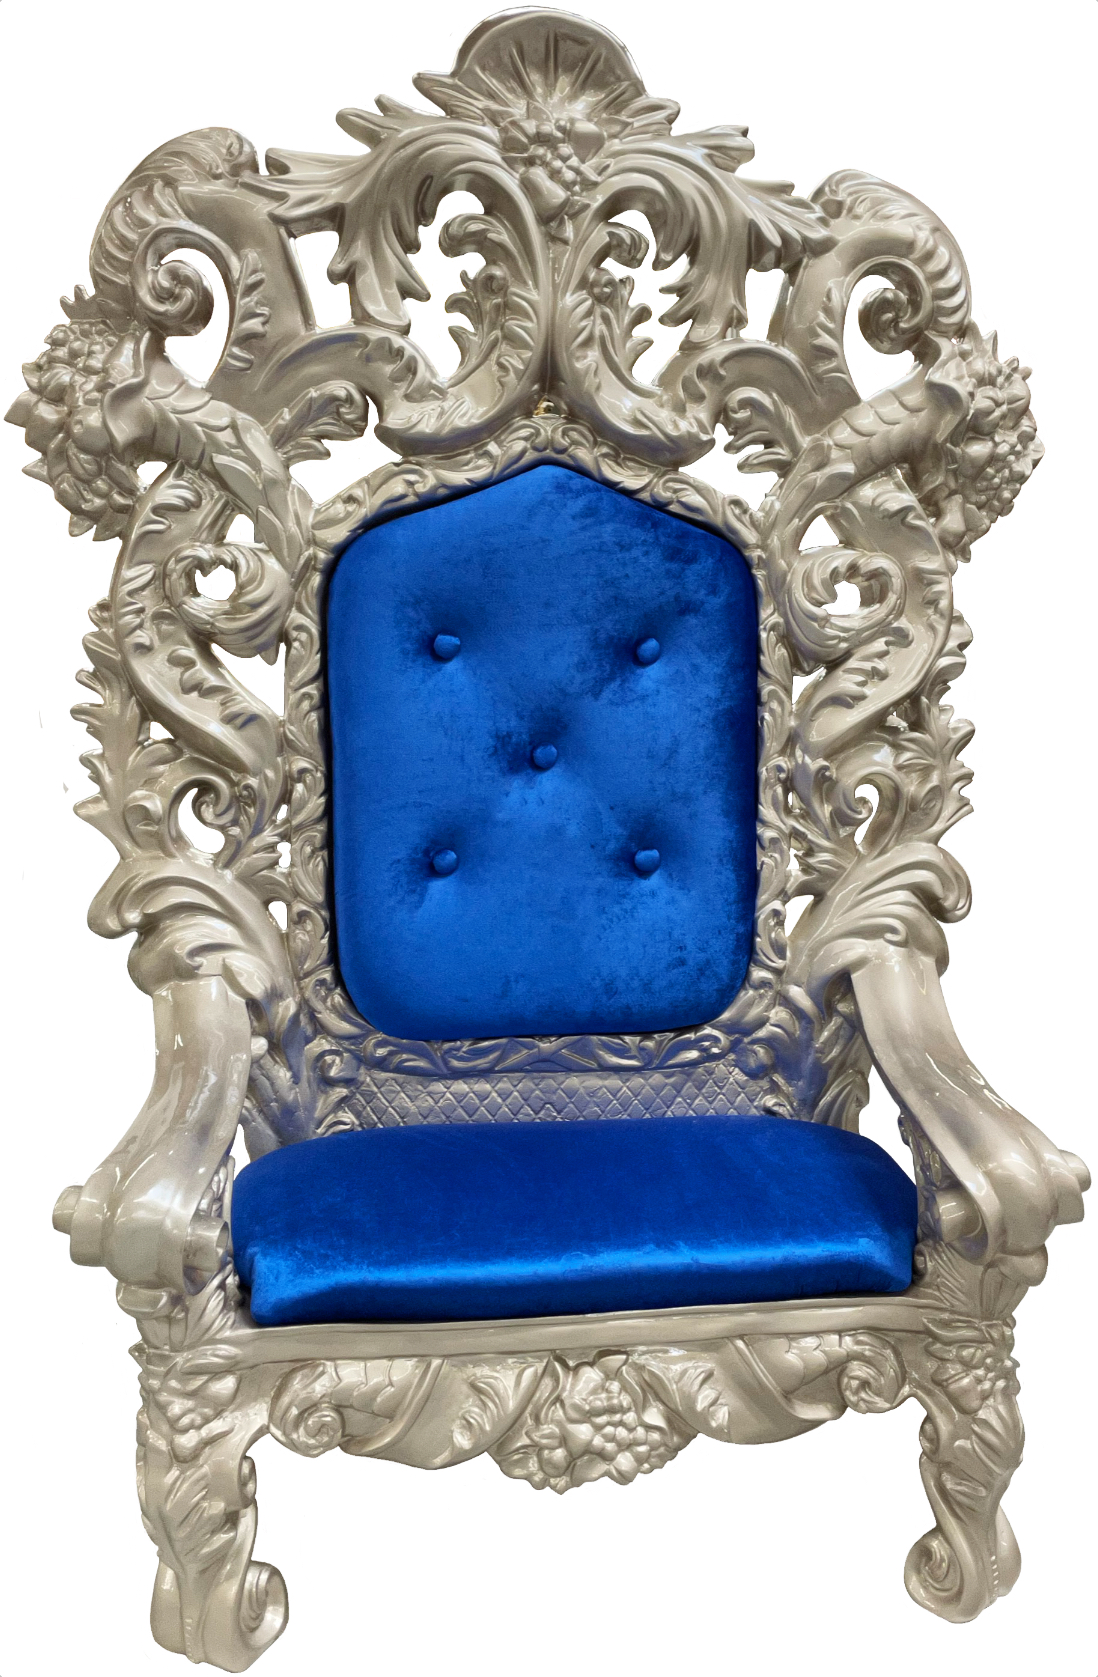 Giant Fiberglass Santa Claus throne with Silver frame and blue velvet upholstery